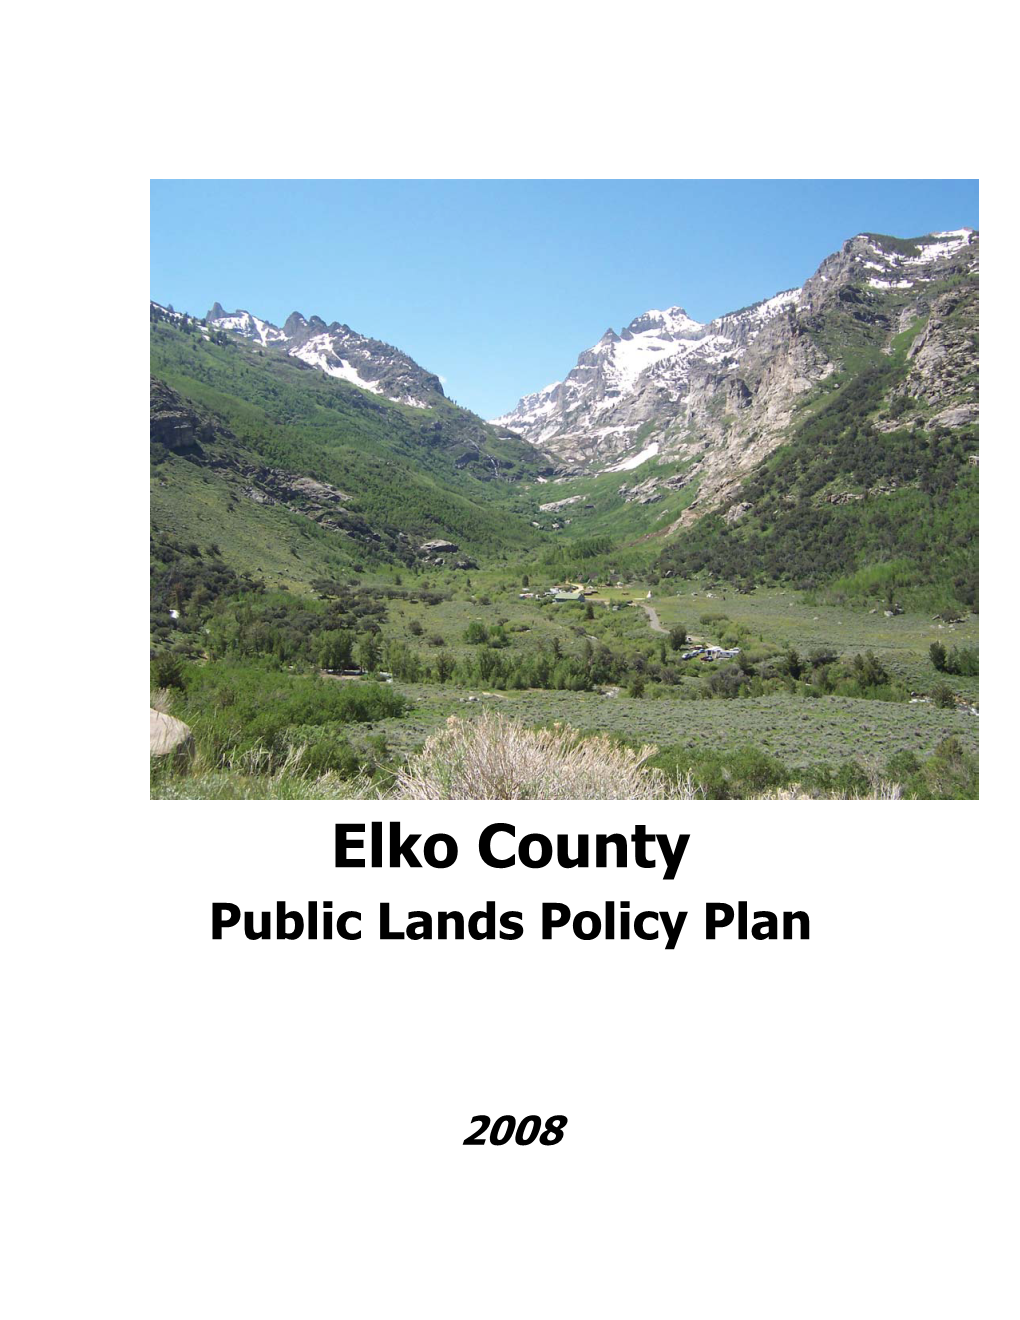 Elko County Public Lands Policy Plan